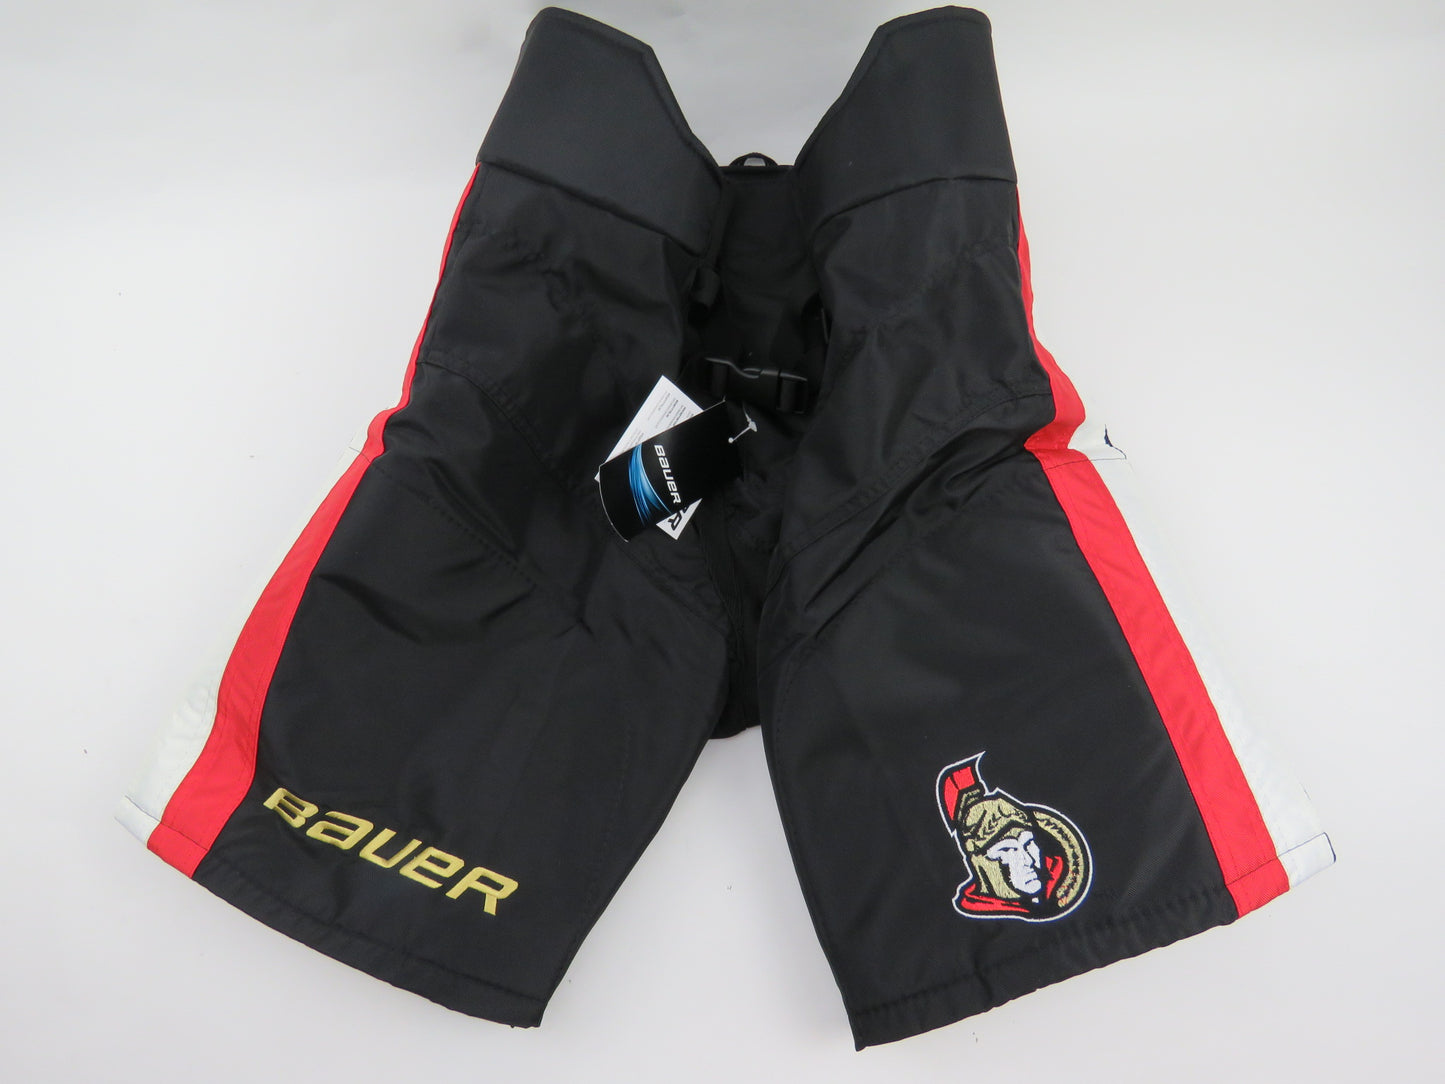 Bauer Supreme Ottawa Senators NHL Pro Stock Hockey Girdle Shell Medium